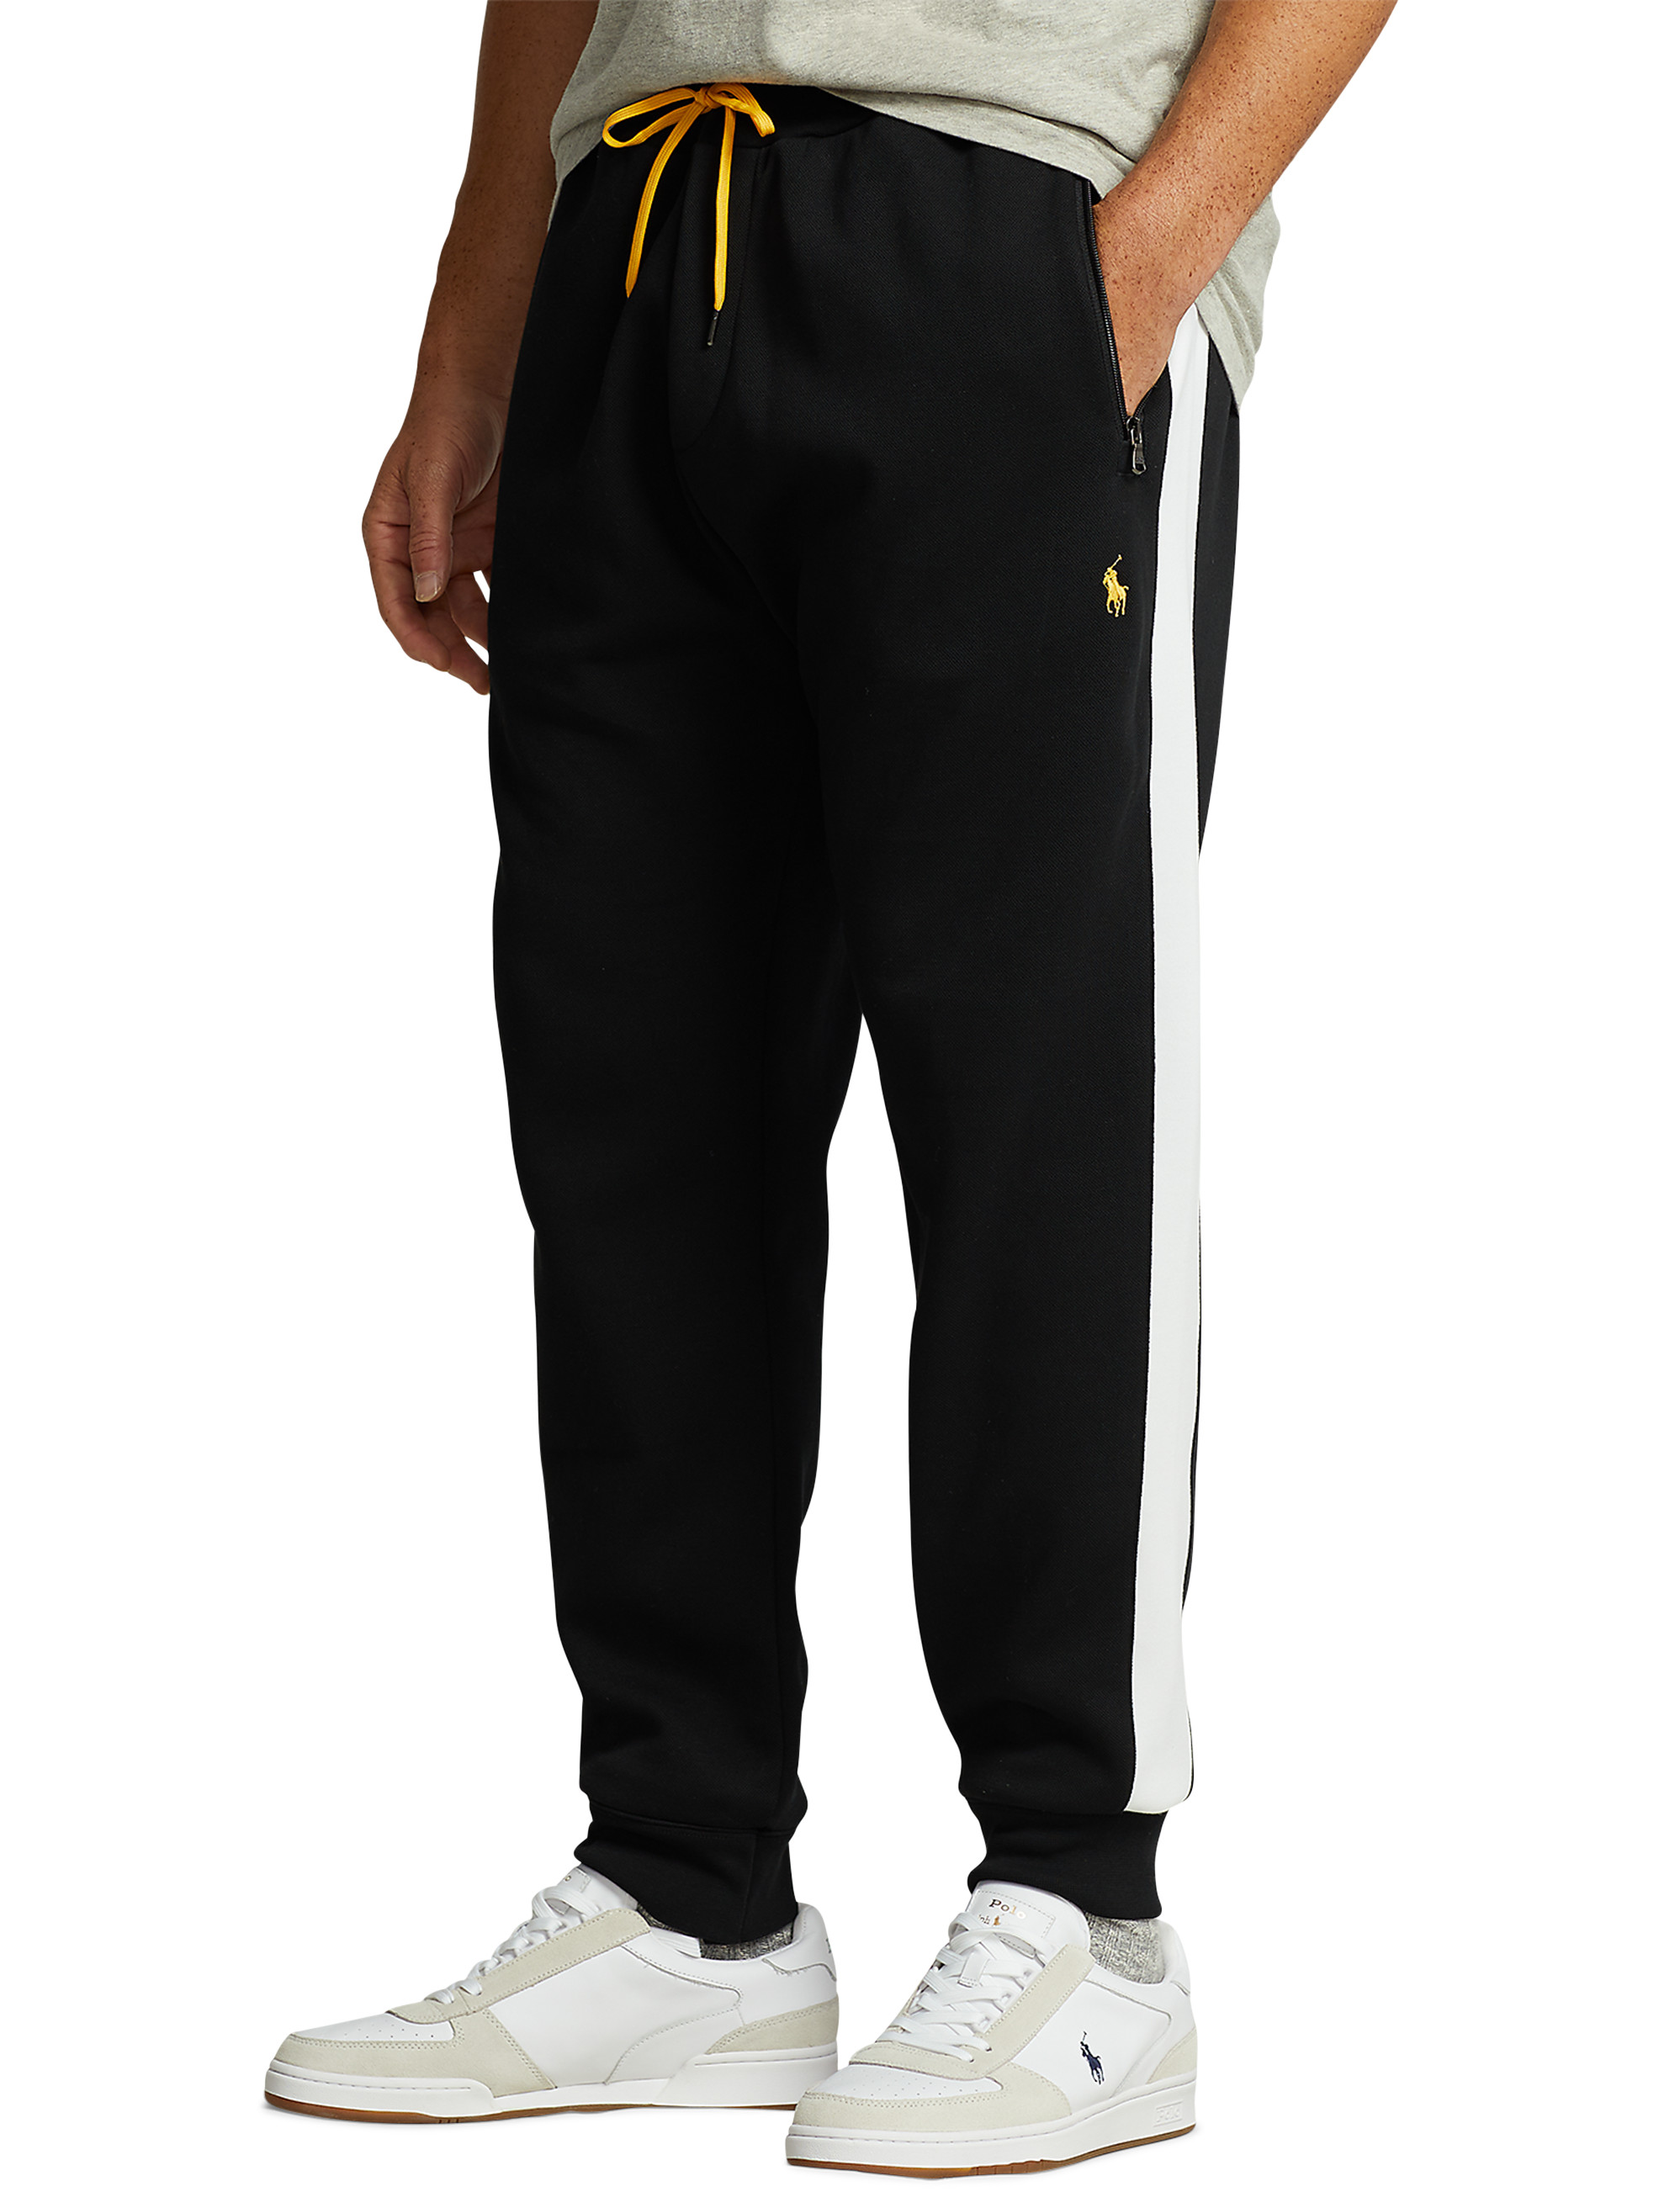 Big + Tall | Polo Ralph Lauren Double-Knit Mesh Track Pants | DXL